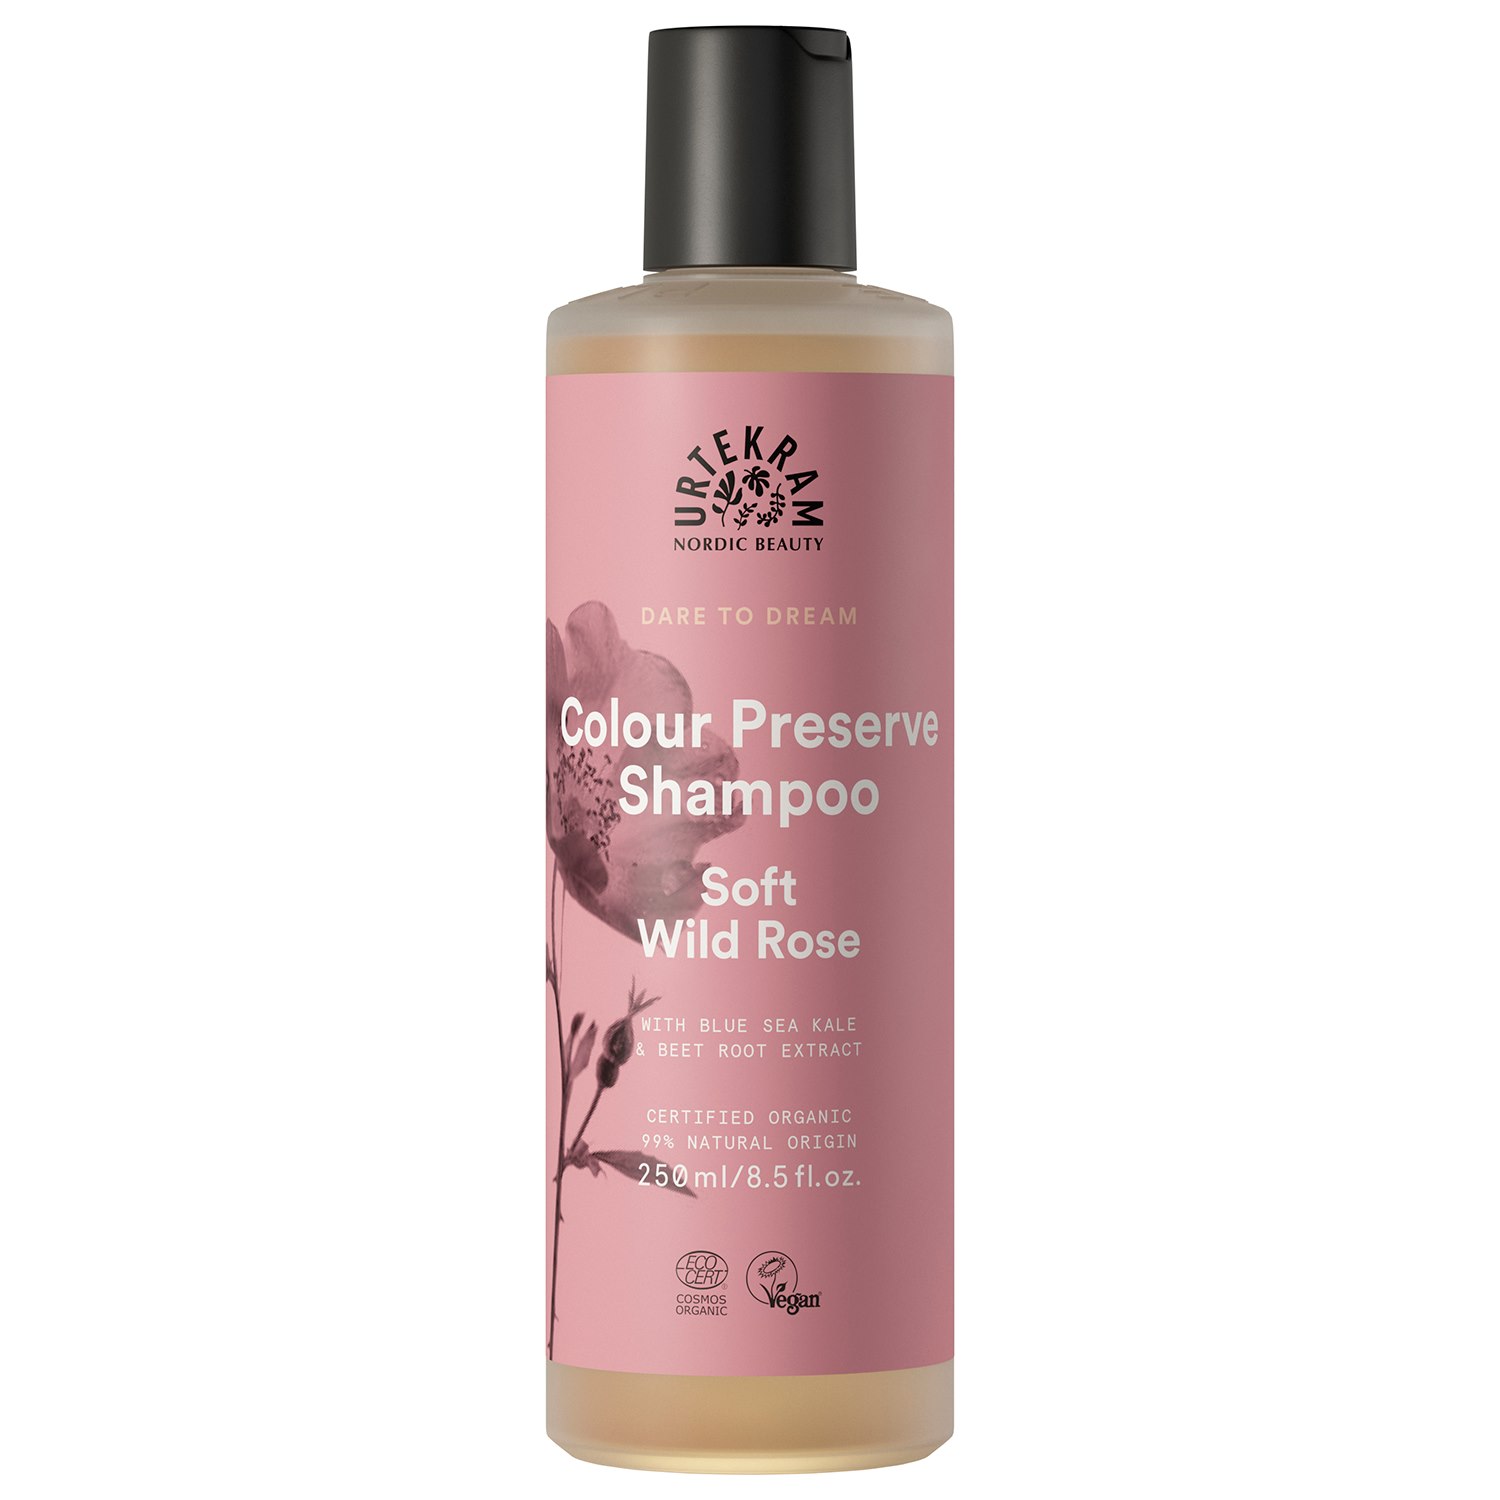 Urtekram Nordic Beauty Dare to Dream Color Preserve Shampoo - Soft Wild Rose 250 ml